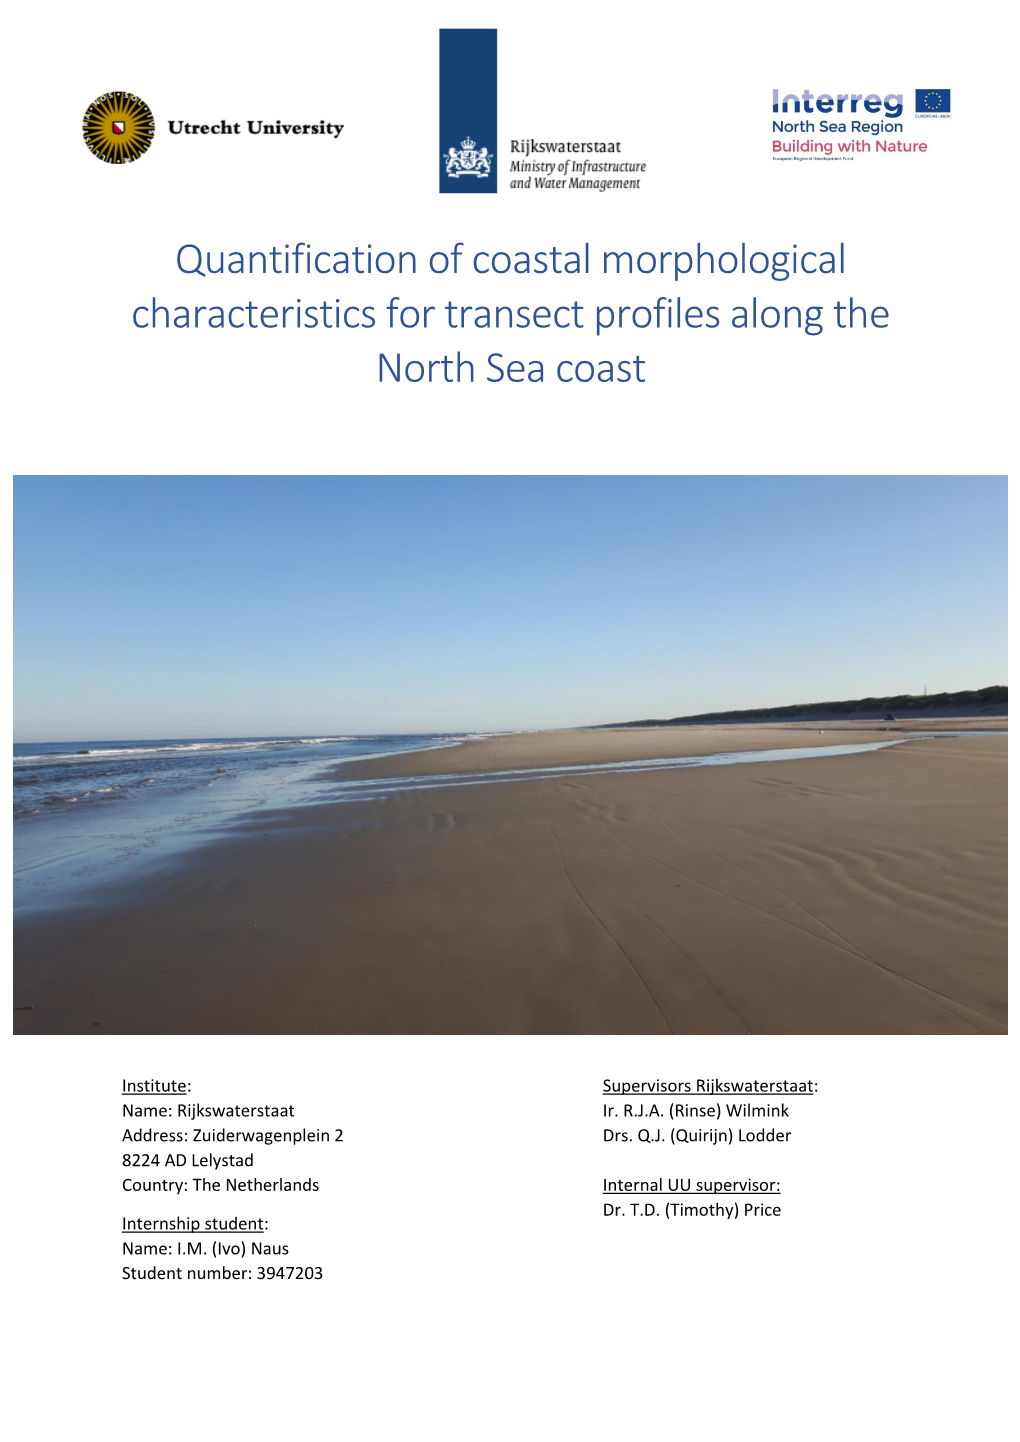 Quantification of Coastal Morphological Characteristics for Transect Profiles Along the North Sea Coast